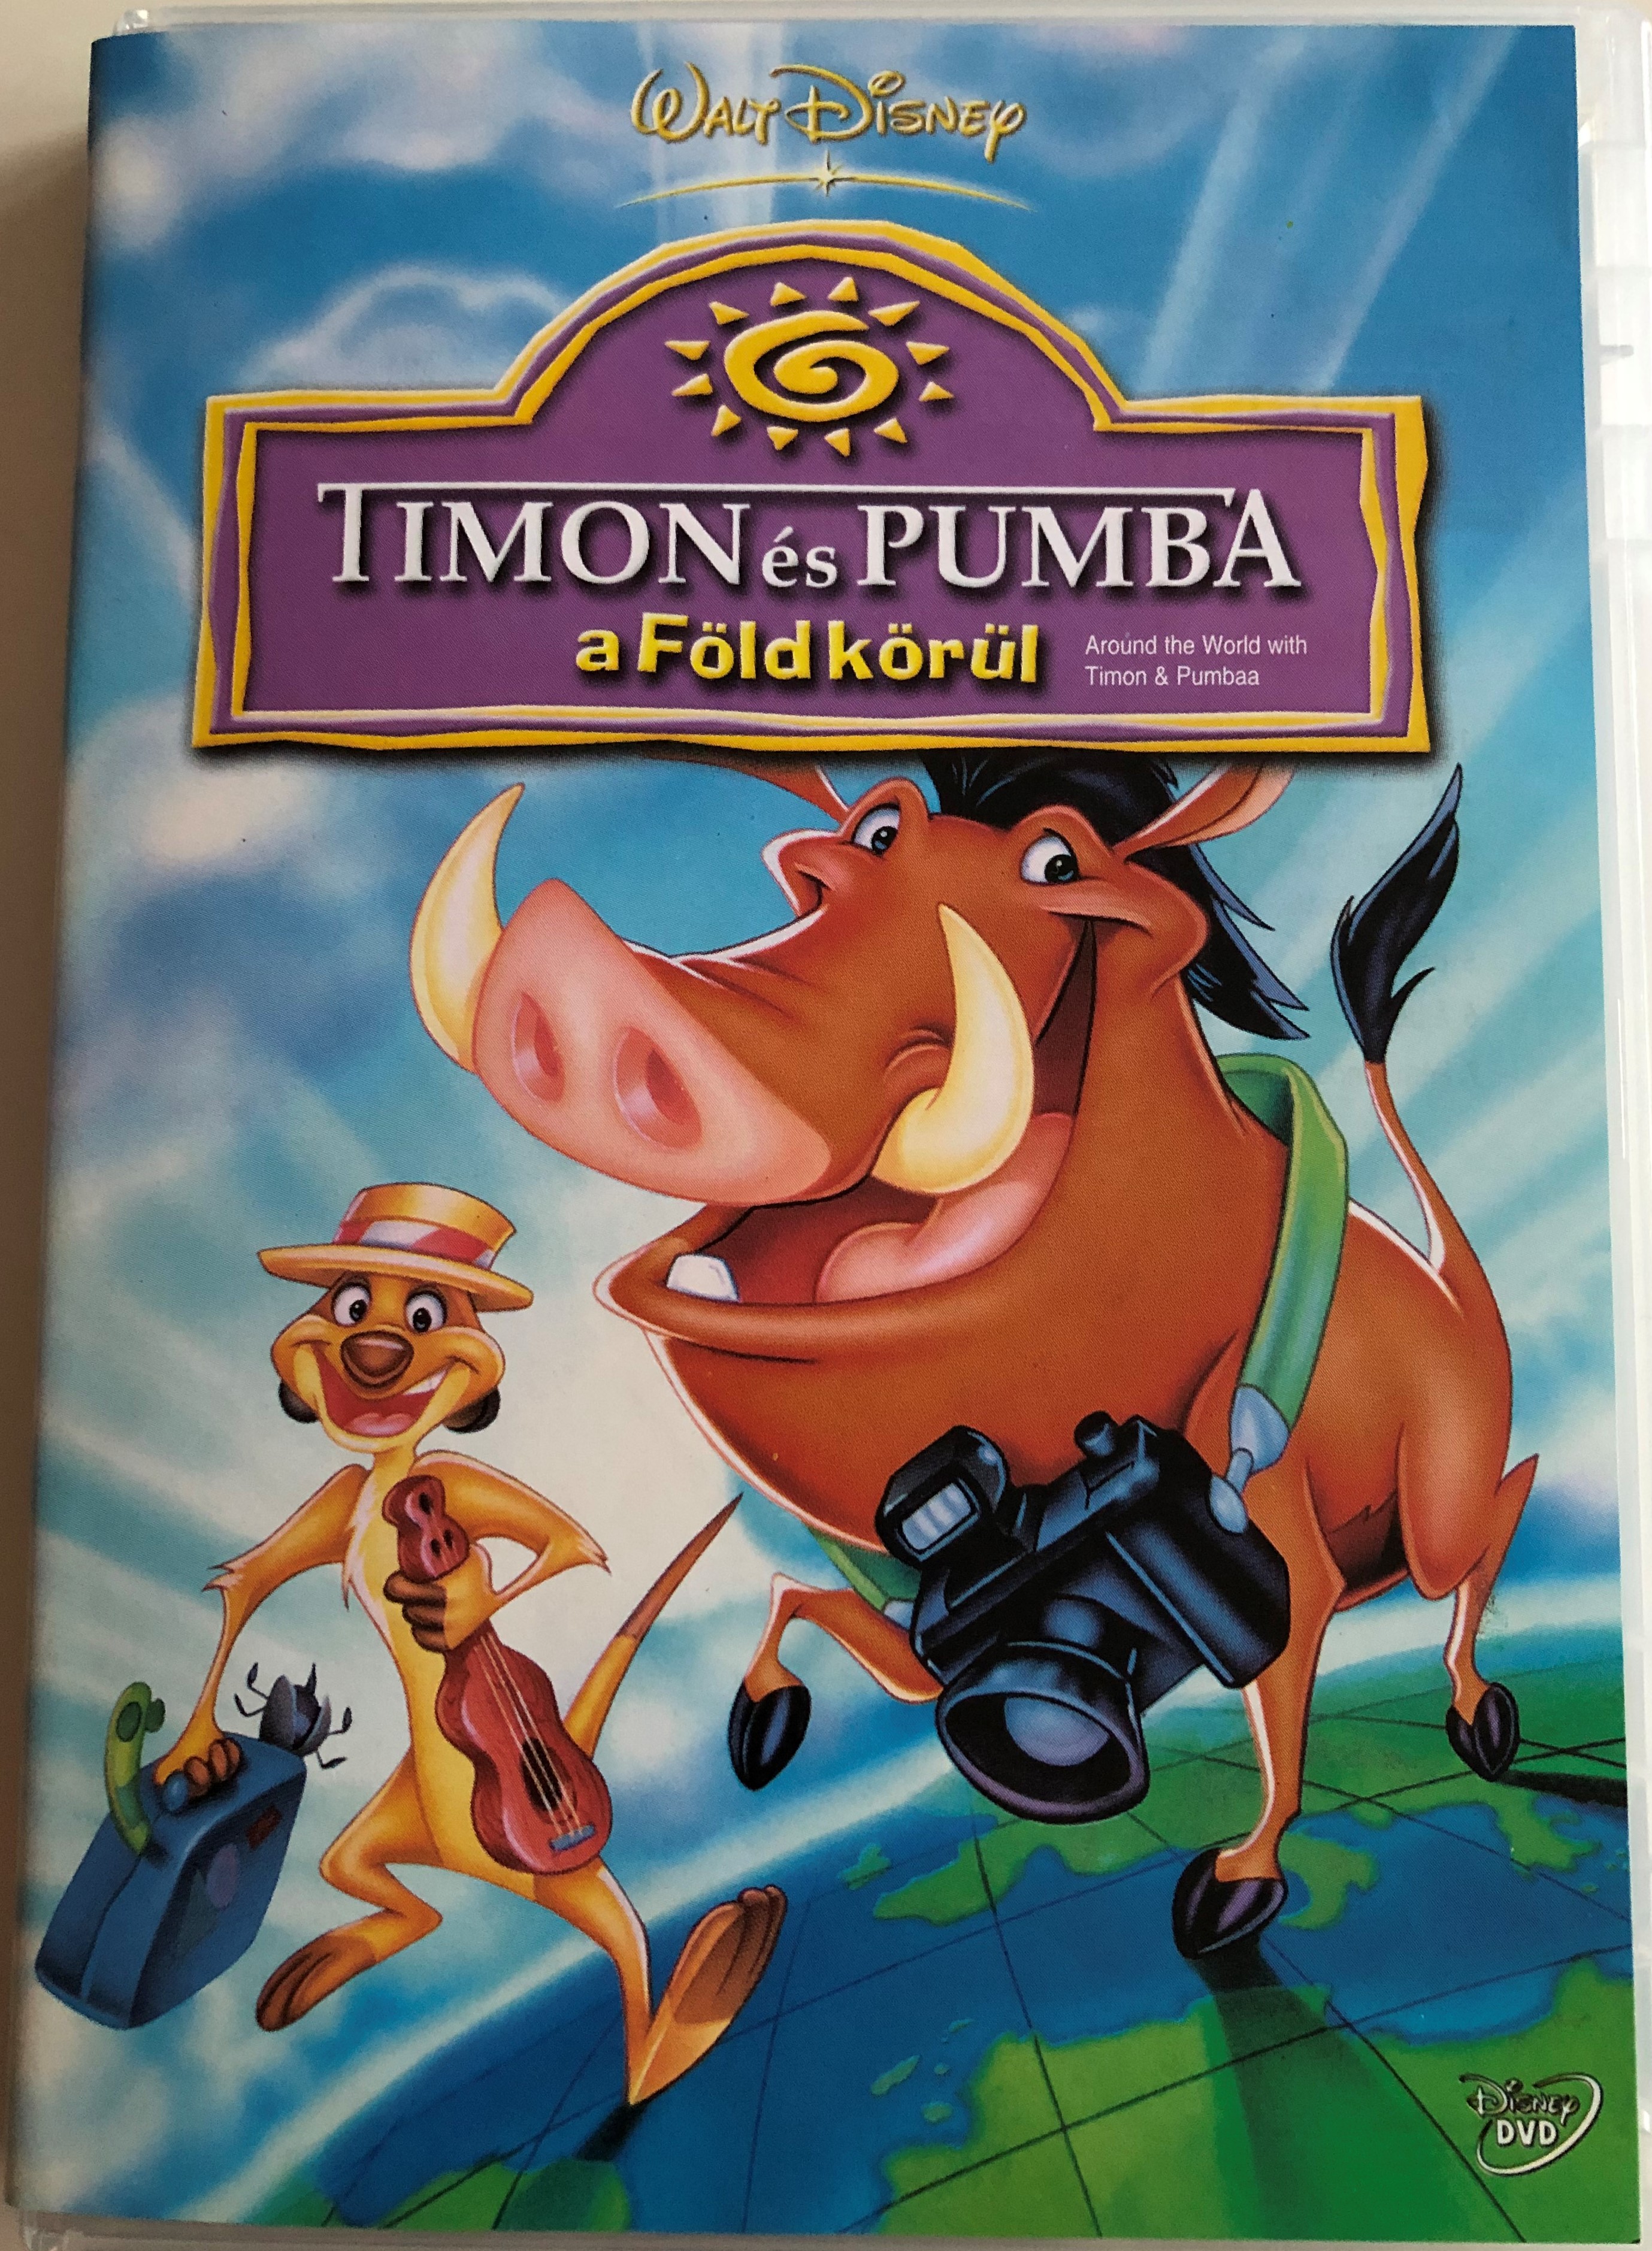 Around the World with Timon and Pumbaa DVD 1996 Timon és Pumba a Föld körül 1